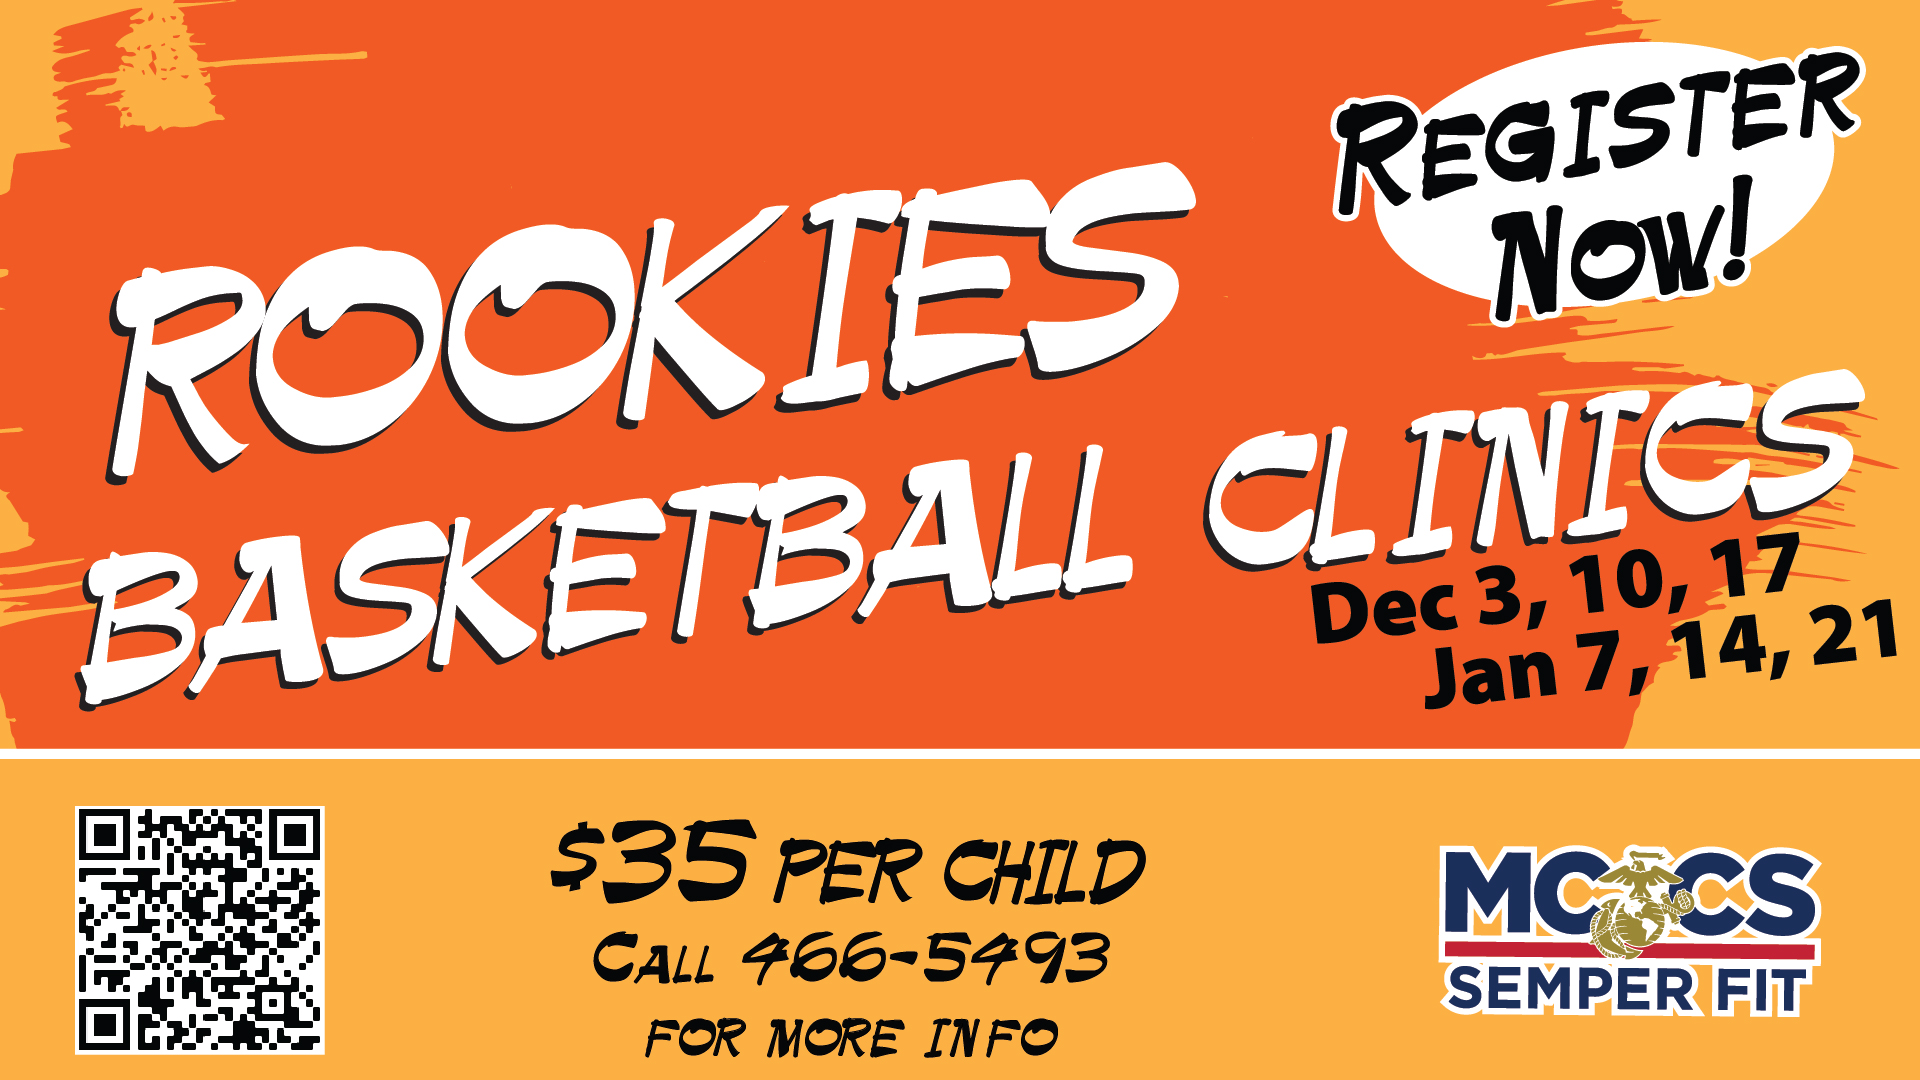 Rookies Basketball Clinics